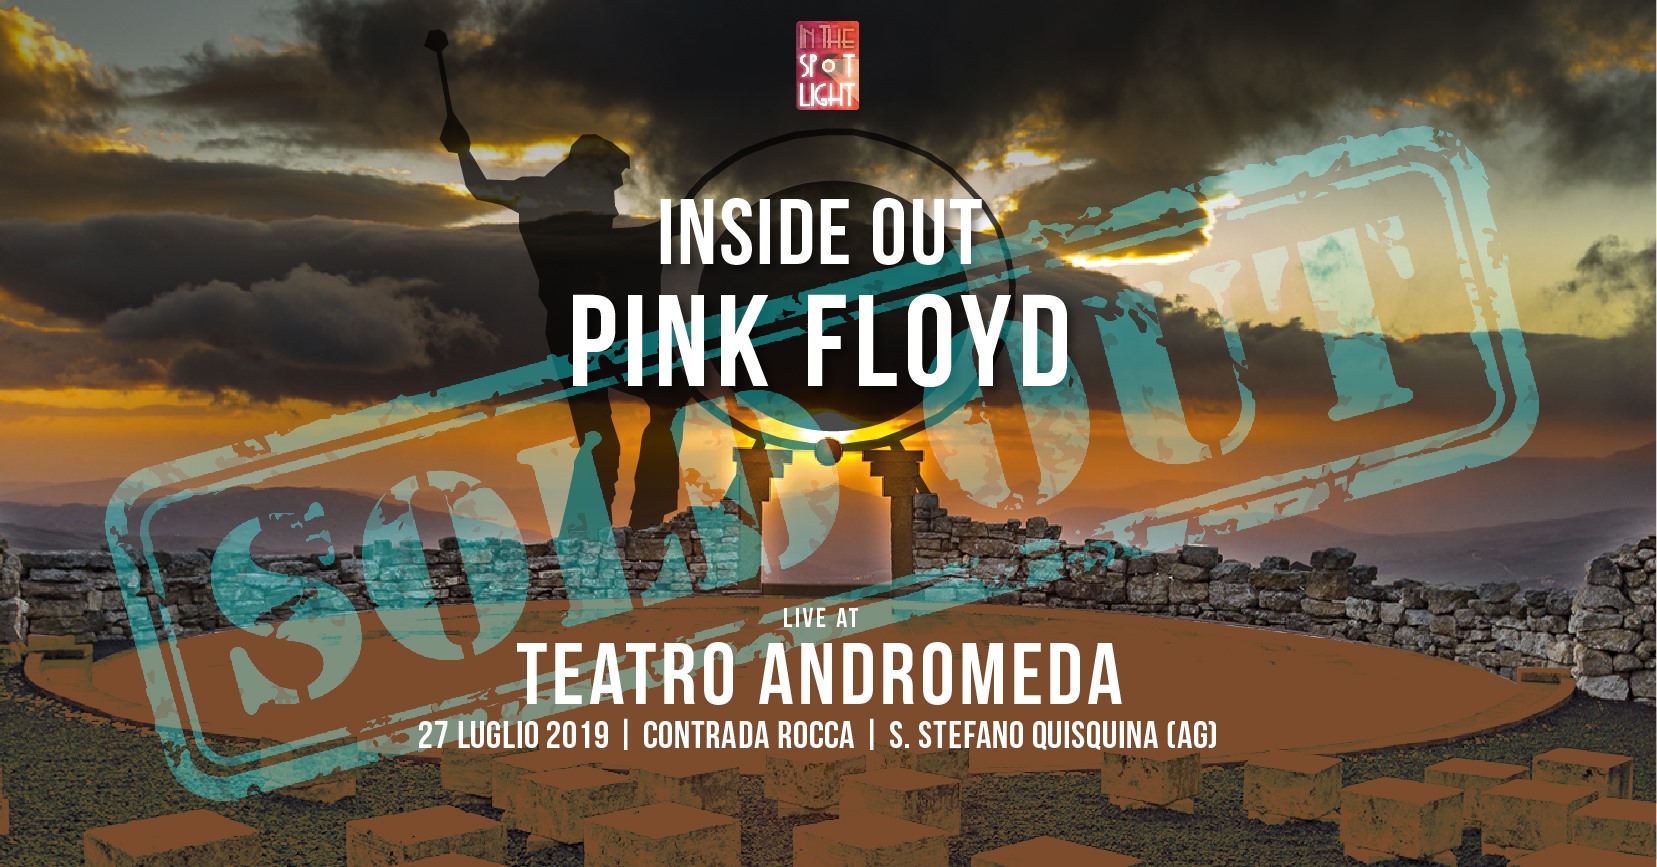 Live at Teatro Andromeda - 27 luglio 2019 - In The Spot Light